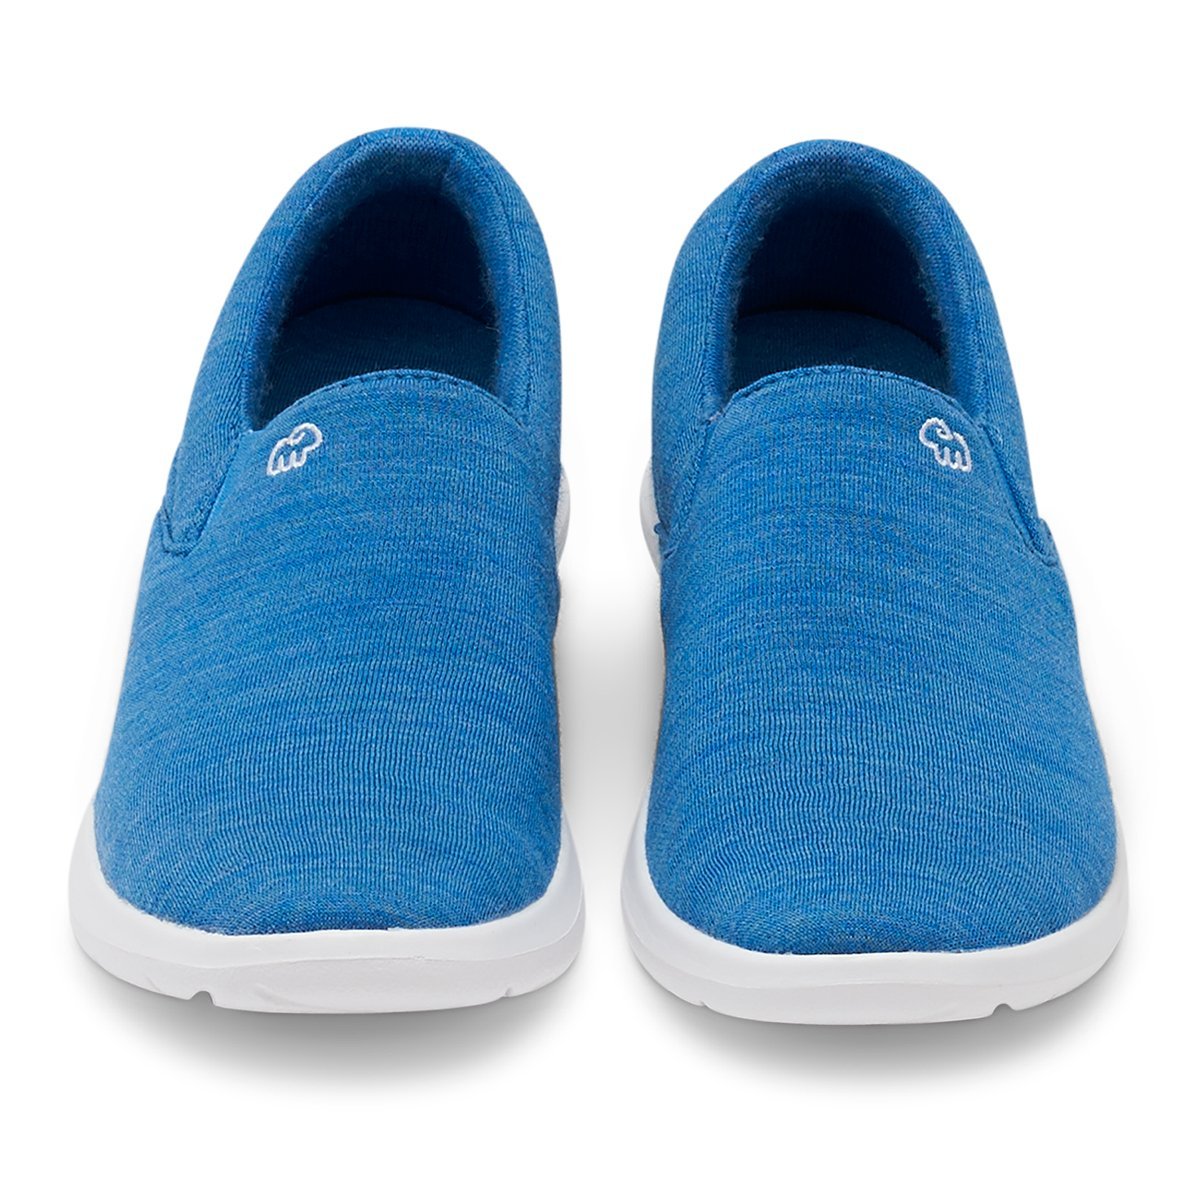 Men's Slip-Ons Bright Blue - Special Offer